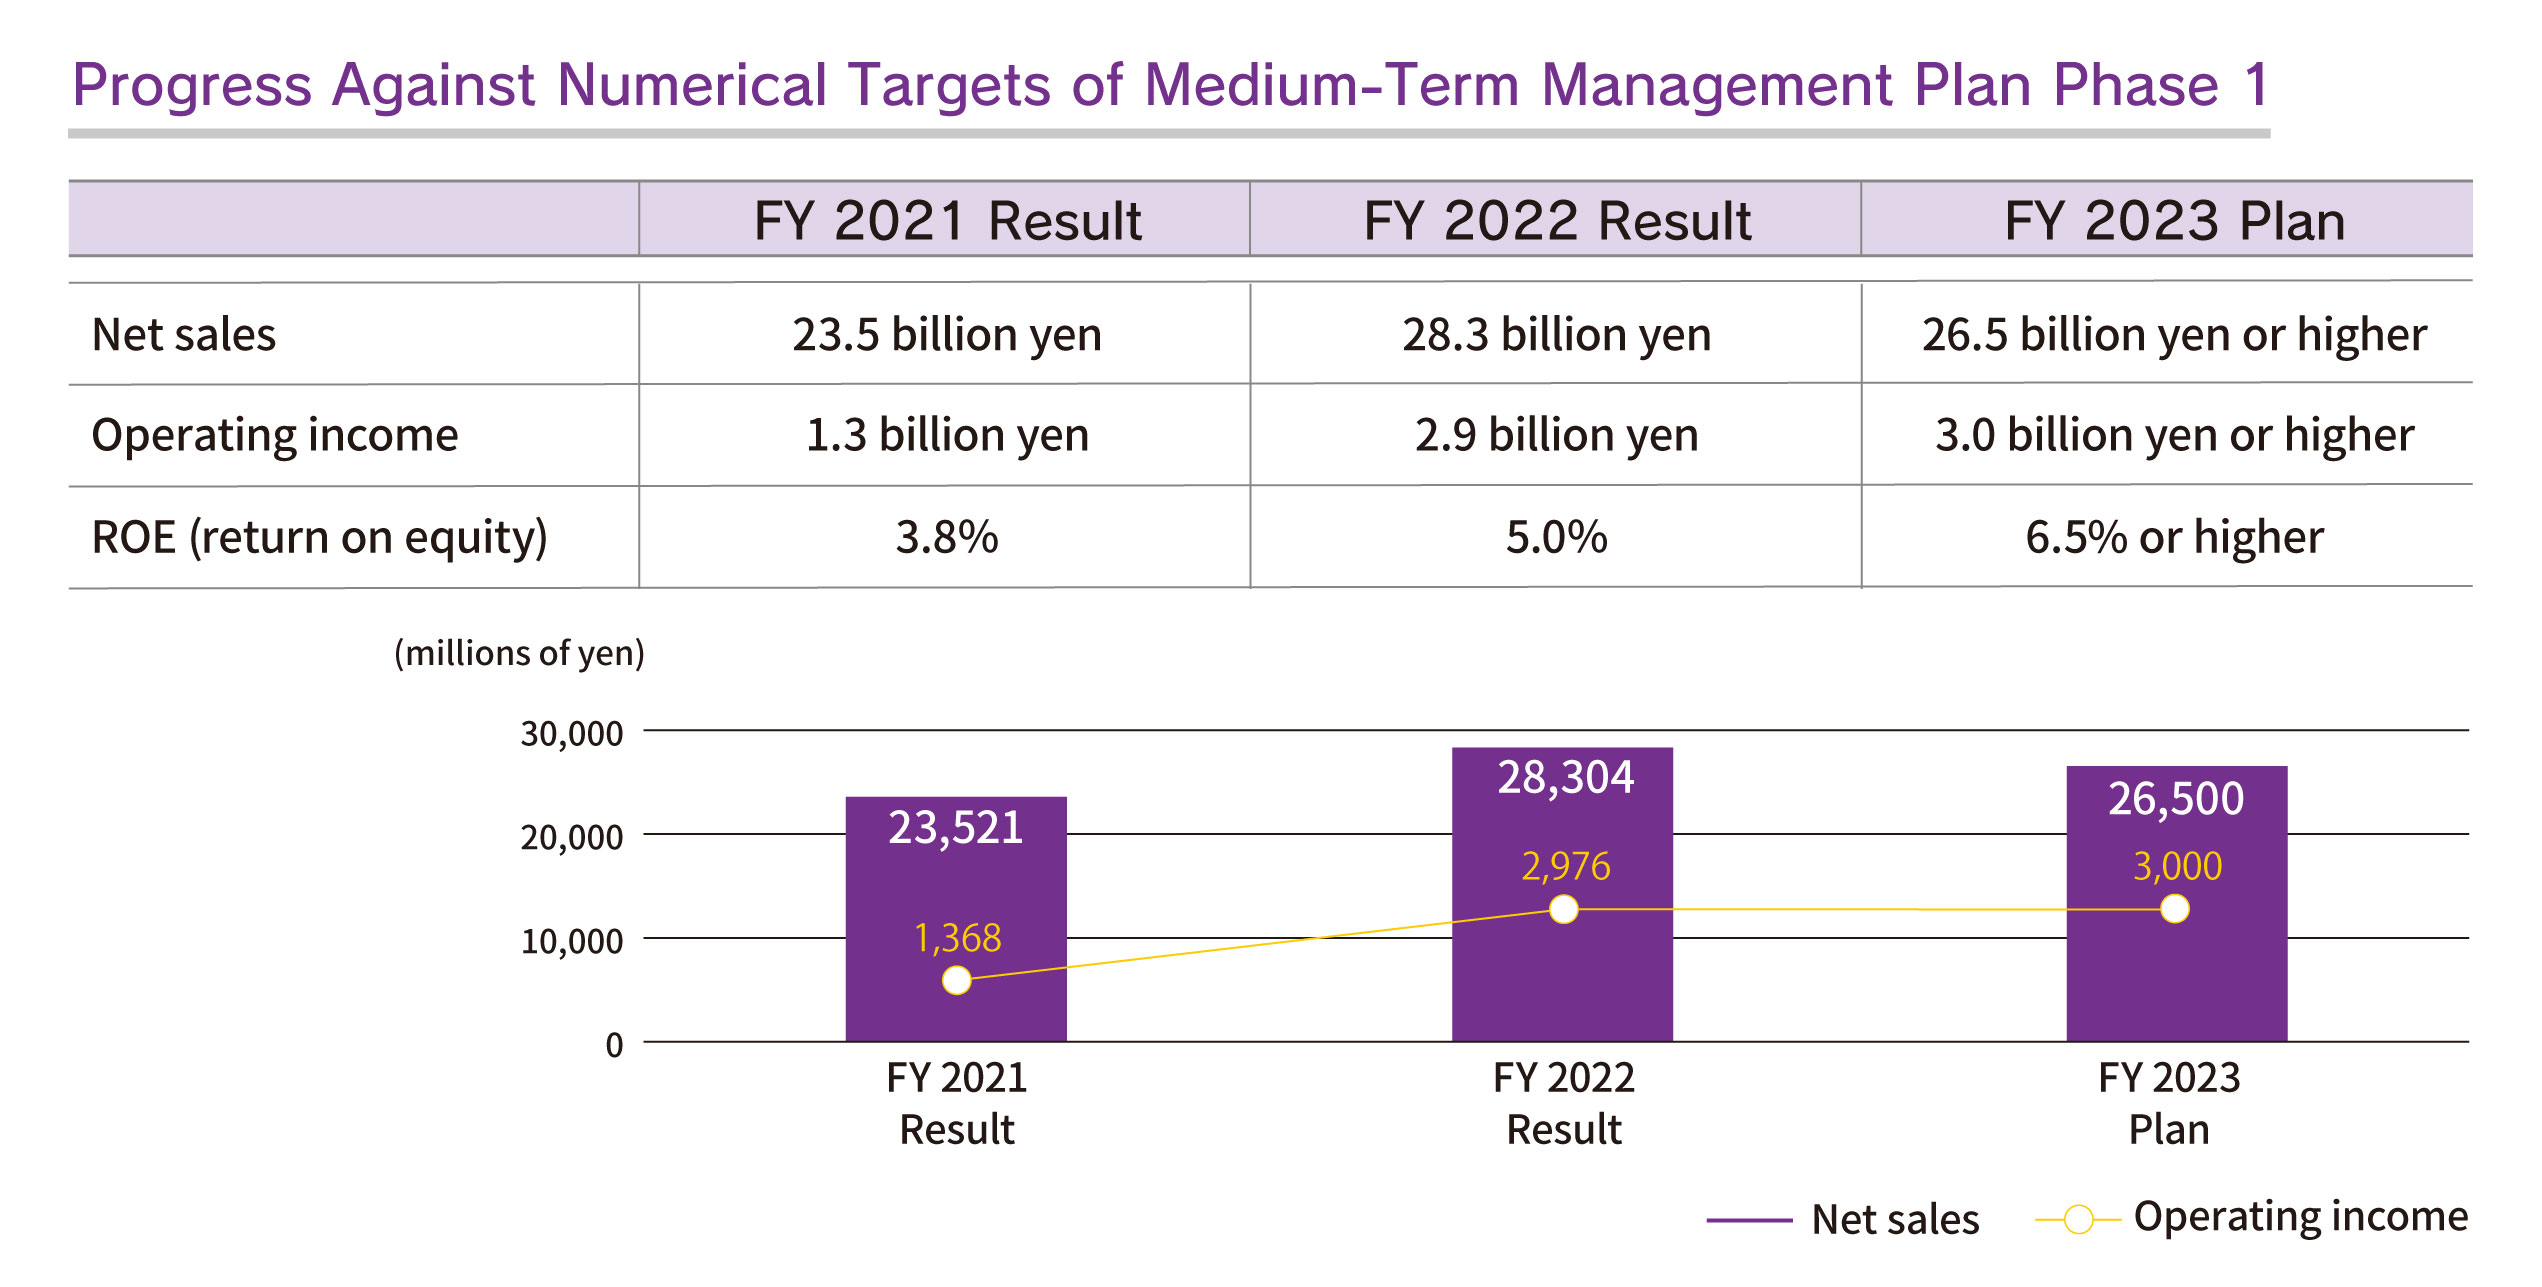 Progress Against Numerical Targets of Medium-Term Management Plan Phase 1